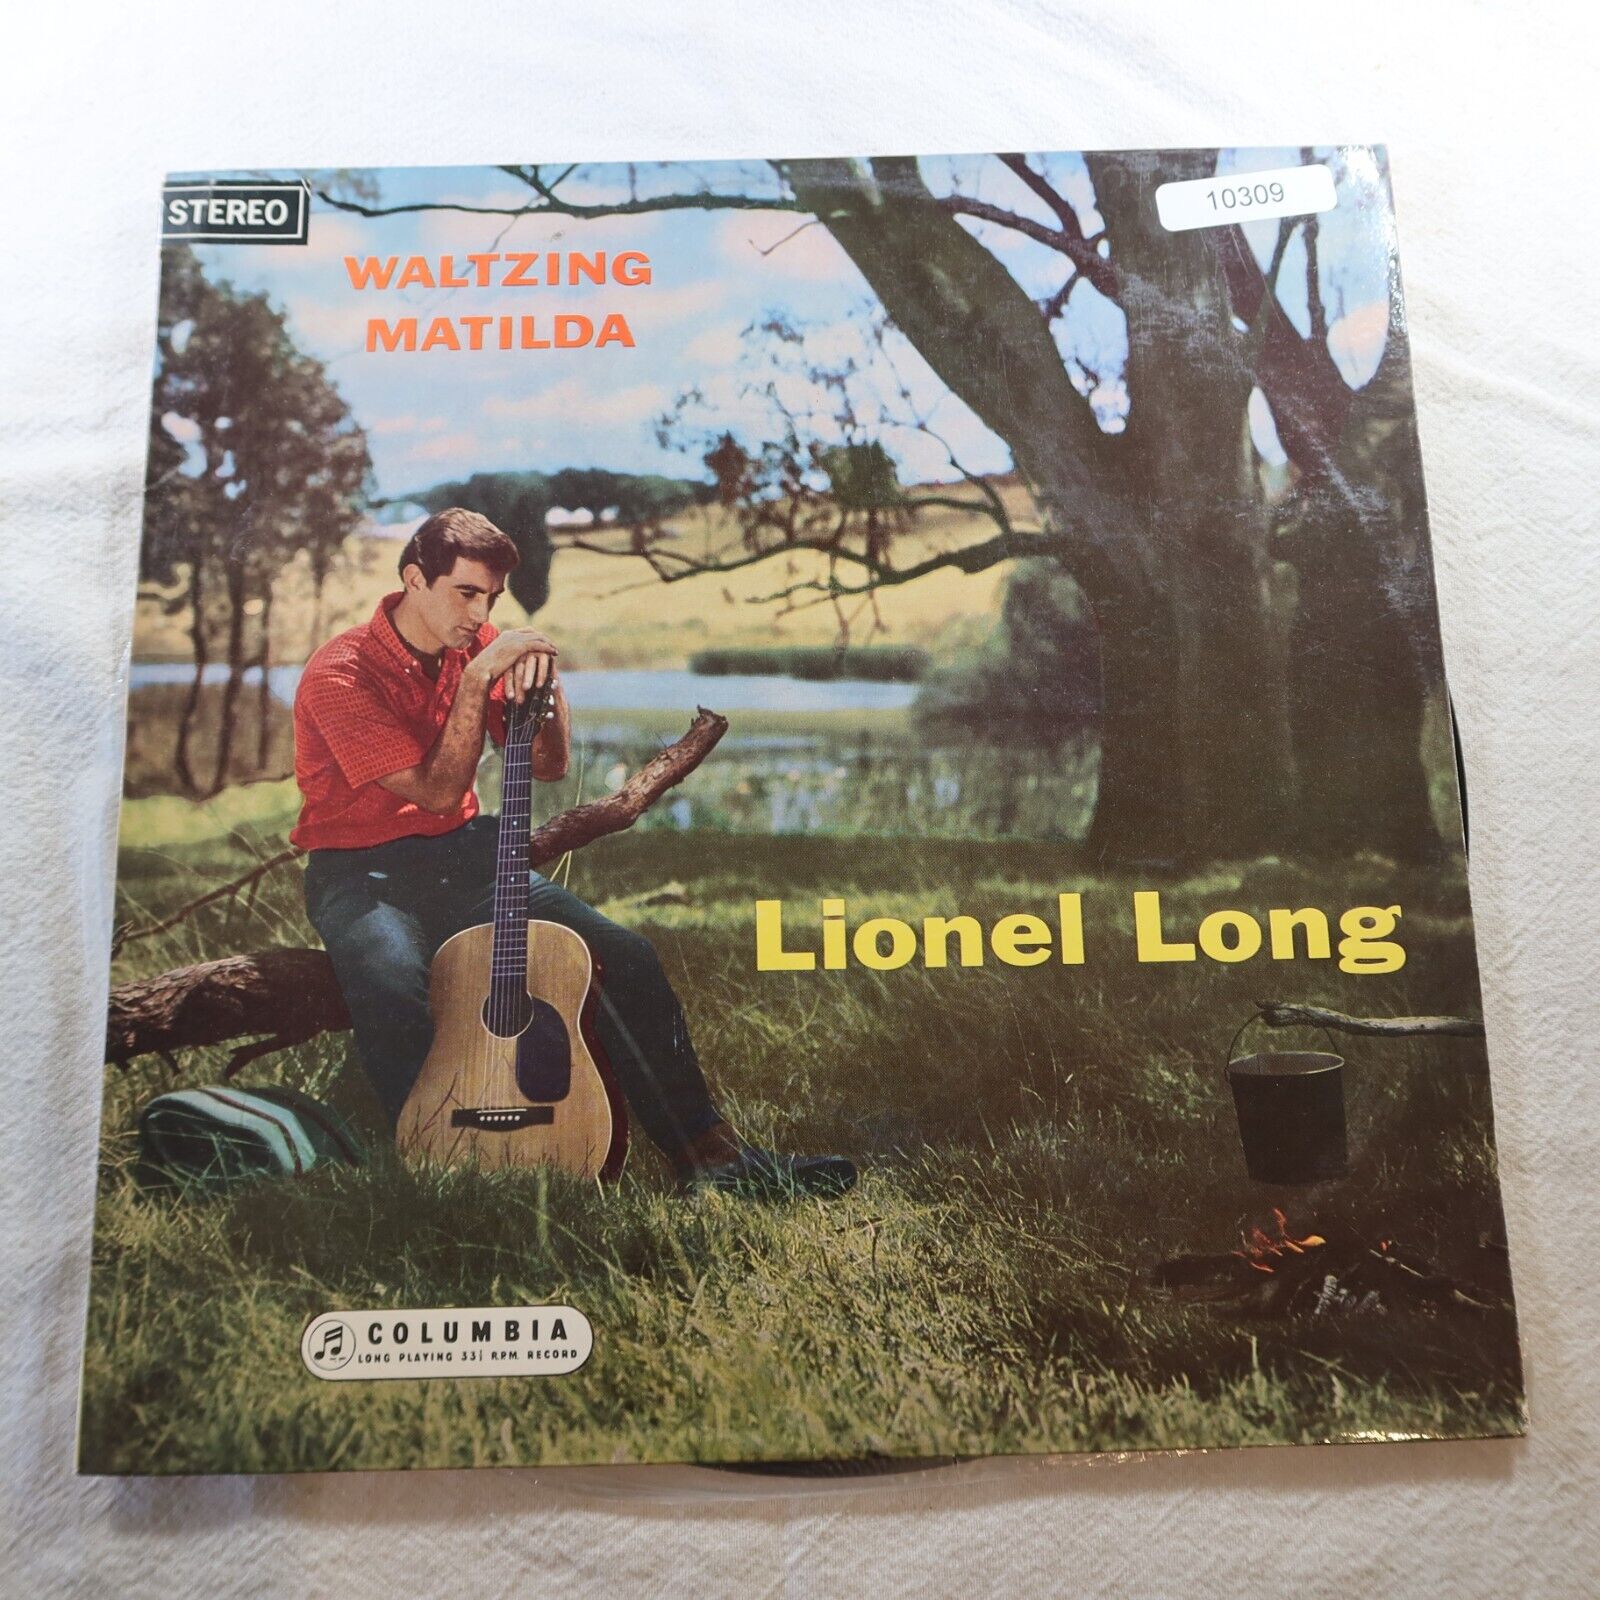 Lionel Long Waltzing Matilda   Record Album Vinyl LP